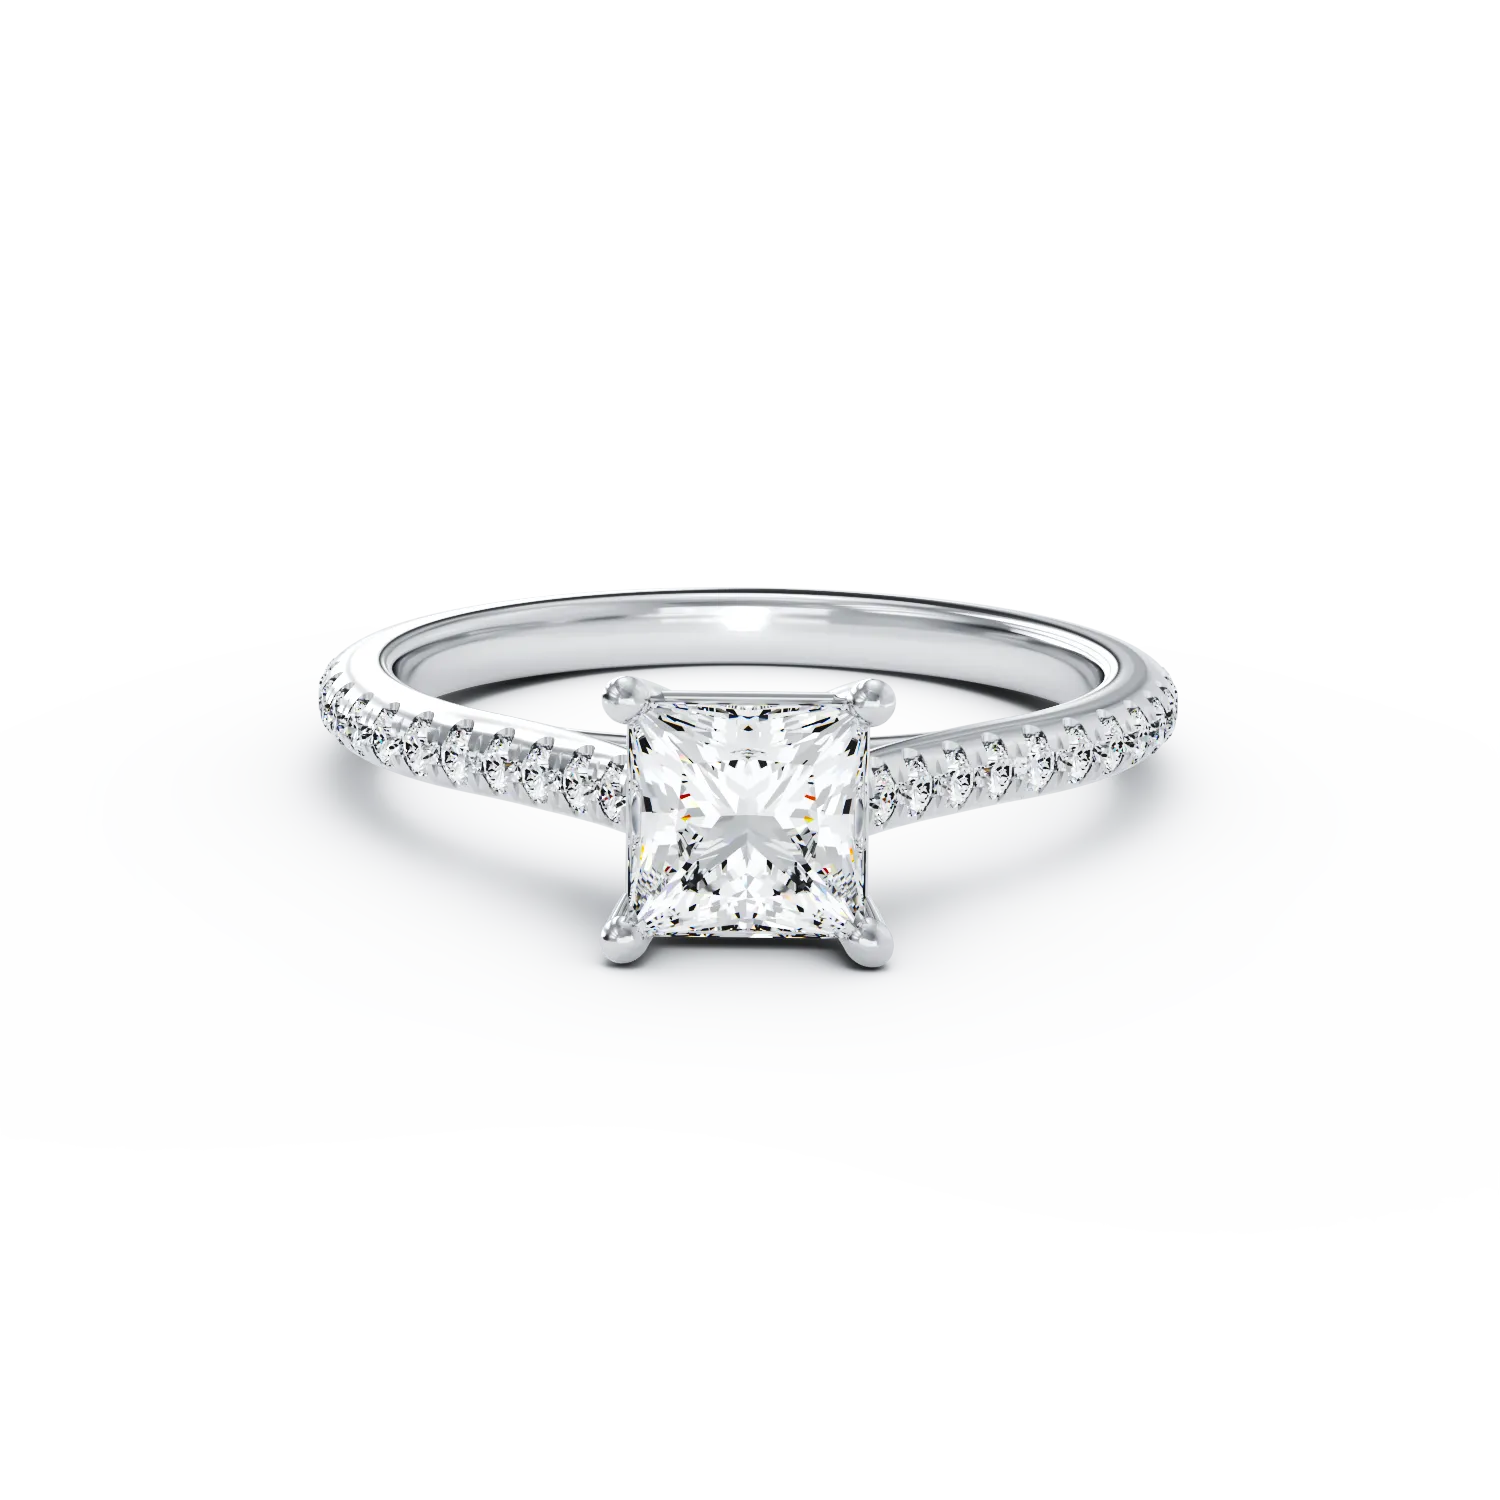 Diamond platinum engagement ring with 1ct diamond and 0.254ct diamonds